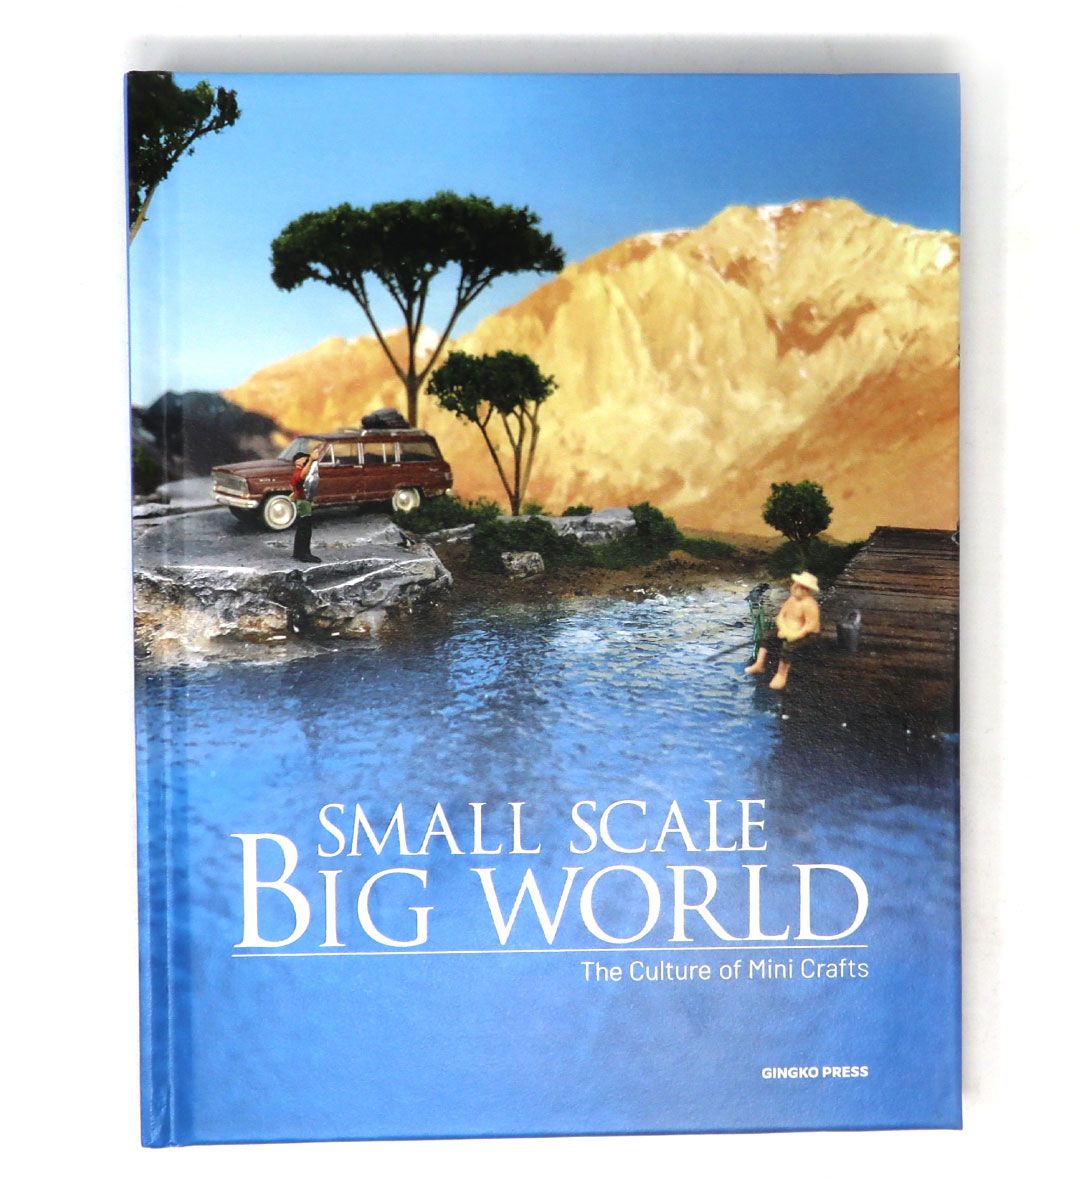 Small scale - Big World